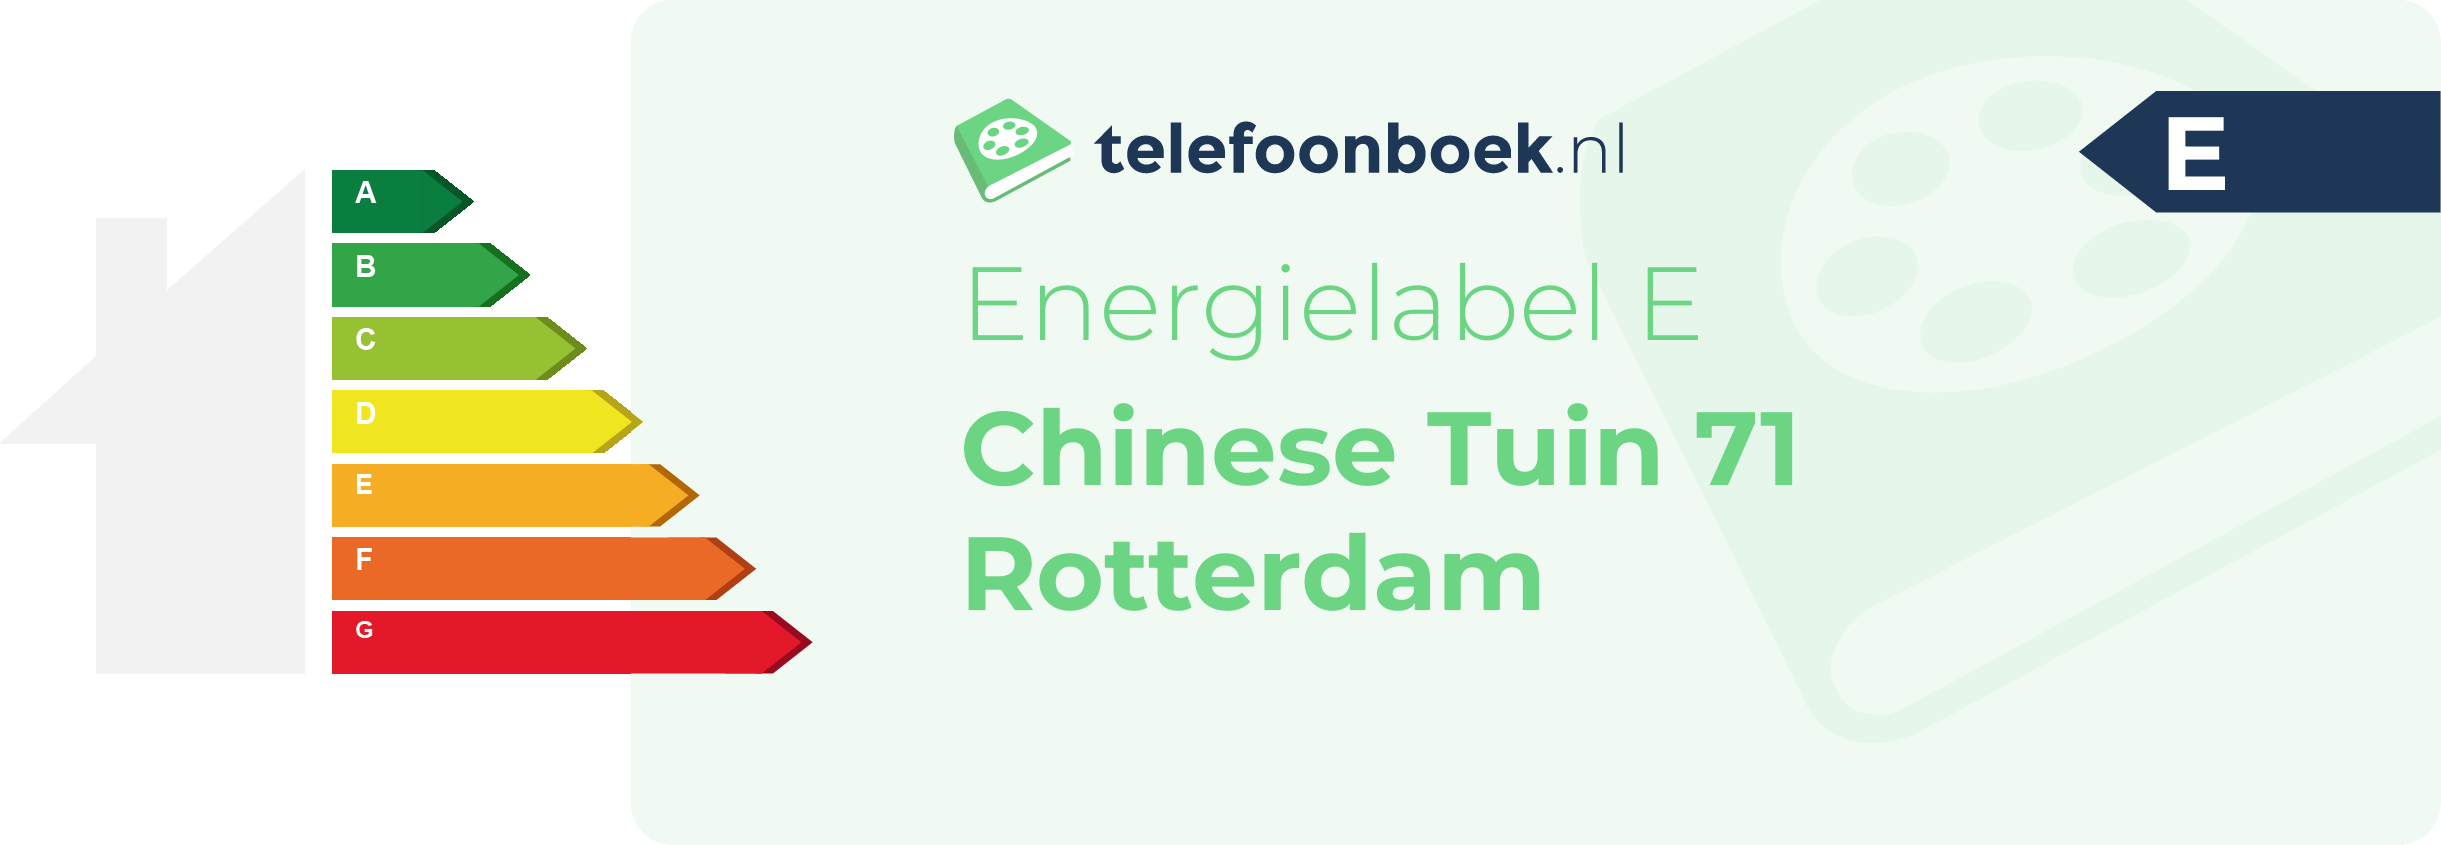 Energielabel Chinese Tuin 71 Rotterdam